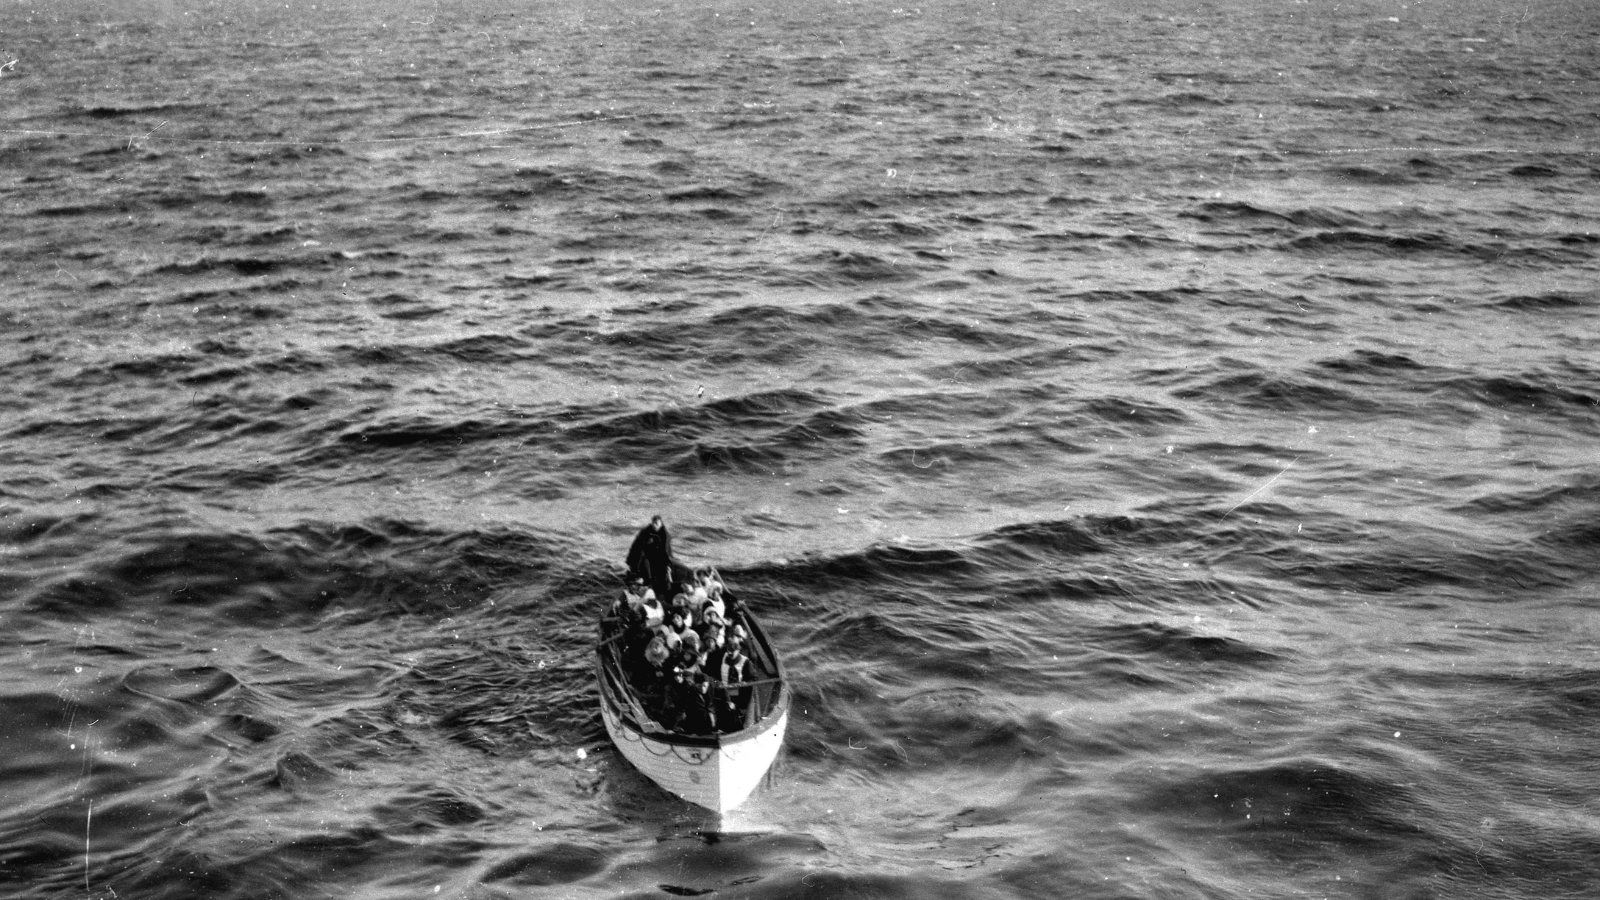 Lifeboat 6w, April 15, 1922